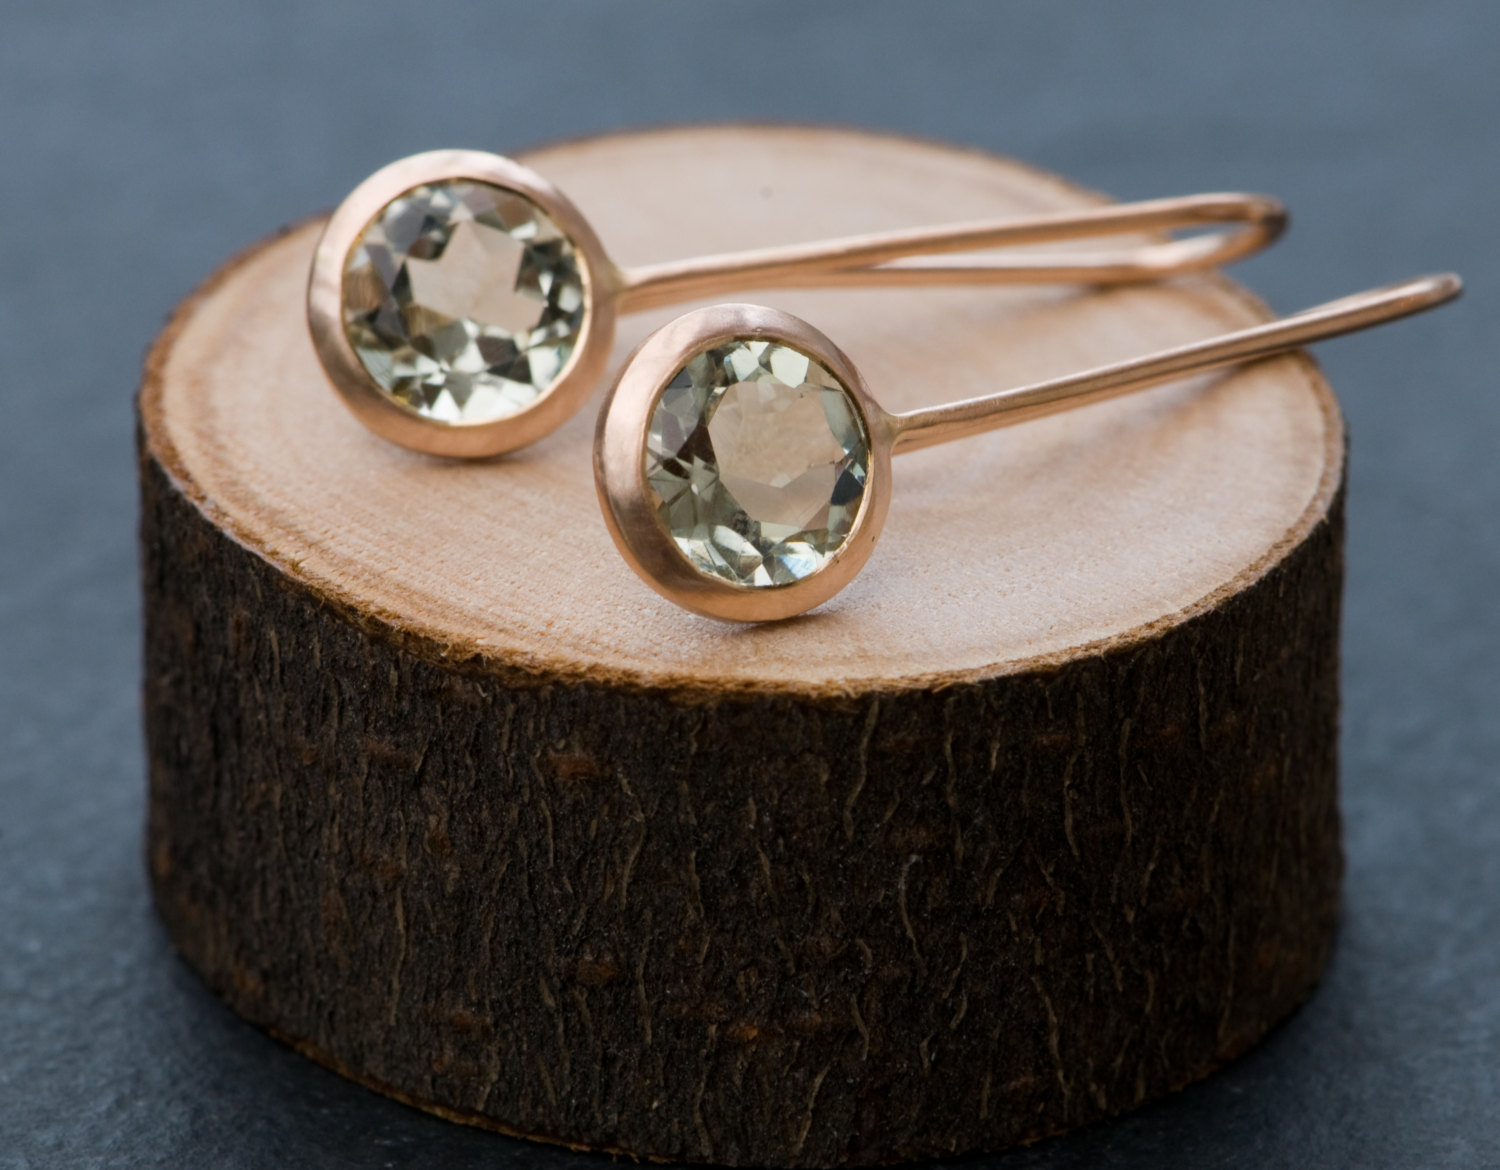 Pale green amethyst lollipop earrings in rose gold. By William White